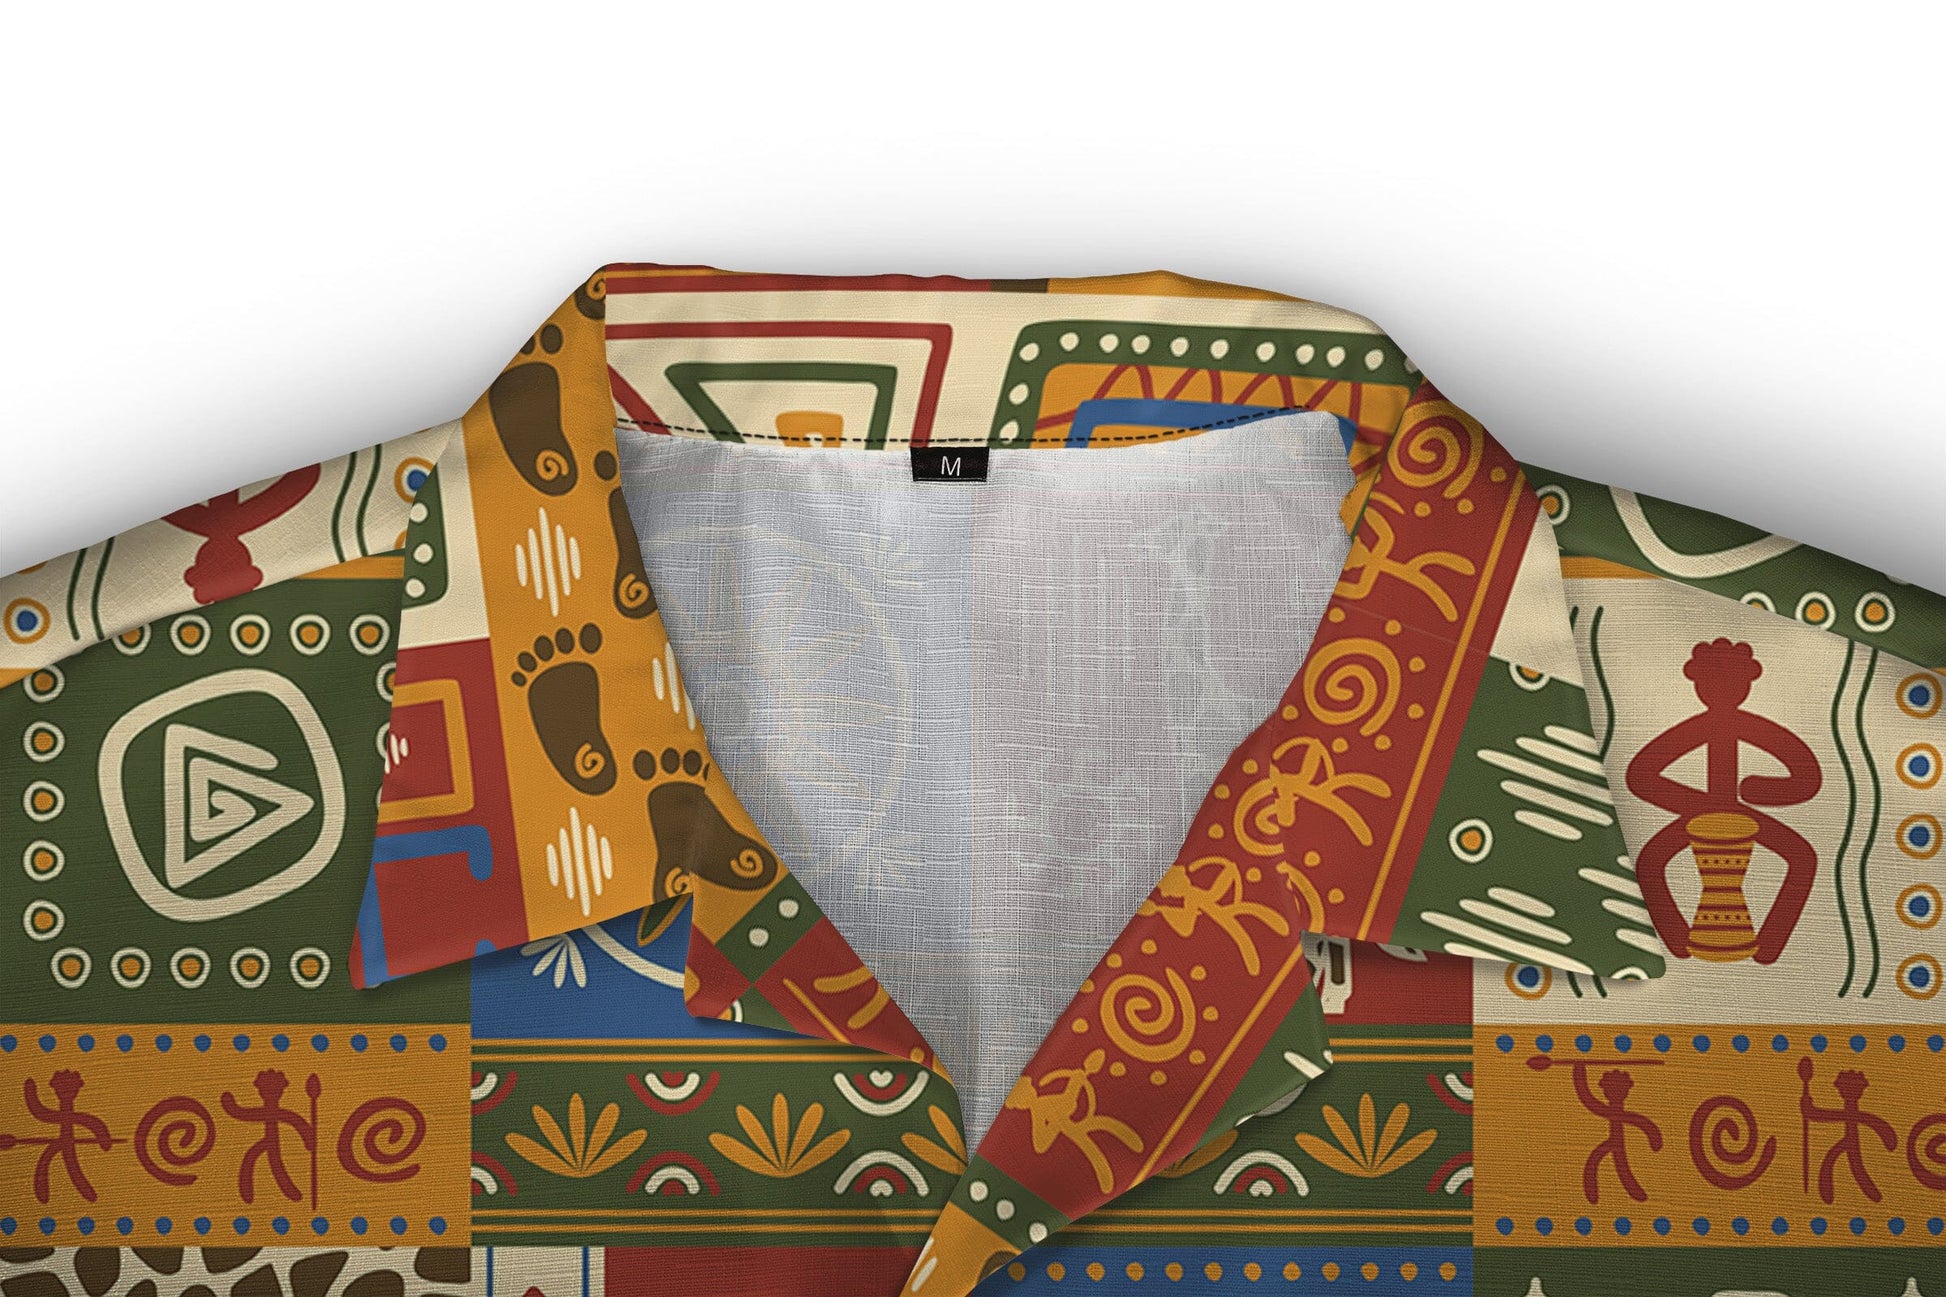 African Patterns Collage Hawaiian Shirt Hawaiian Shirt Tianci 